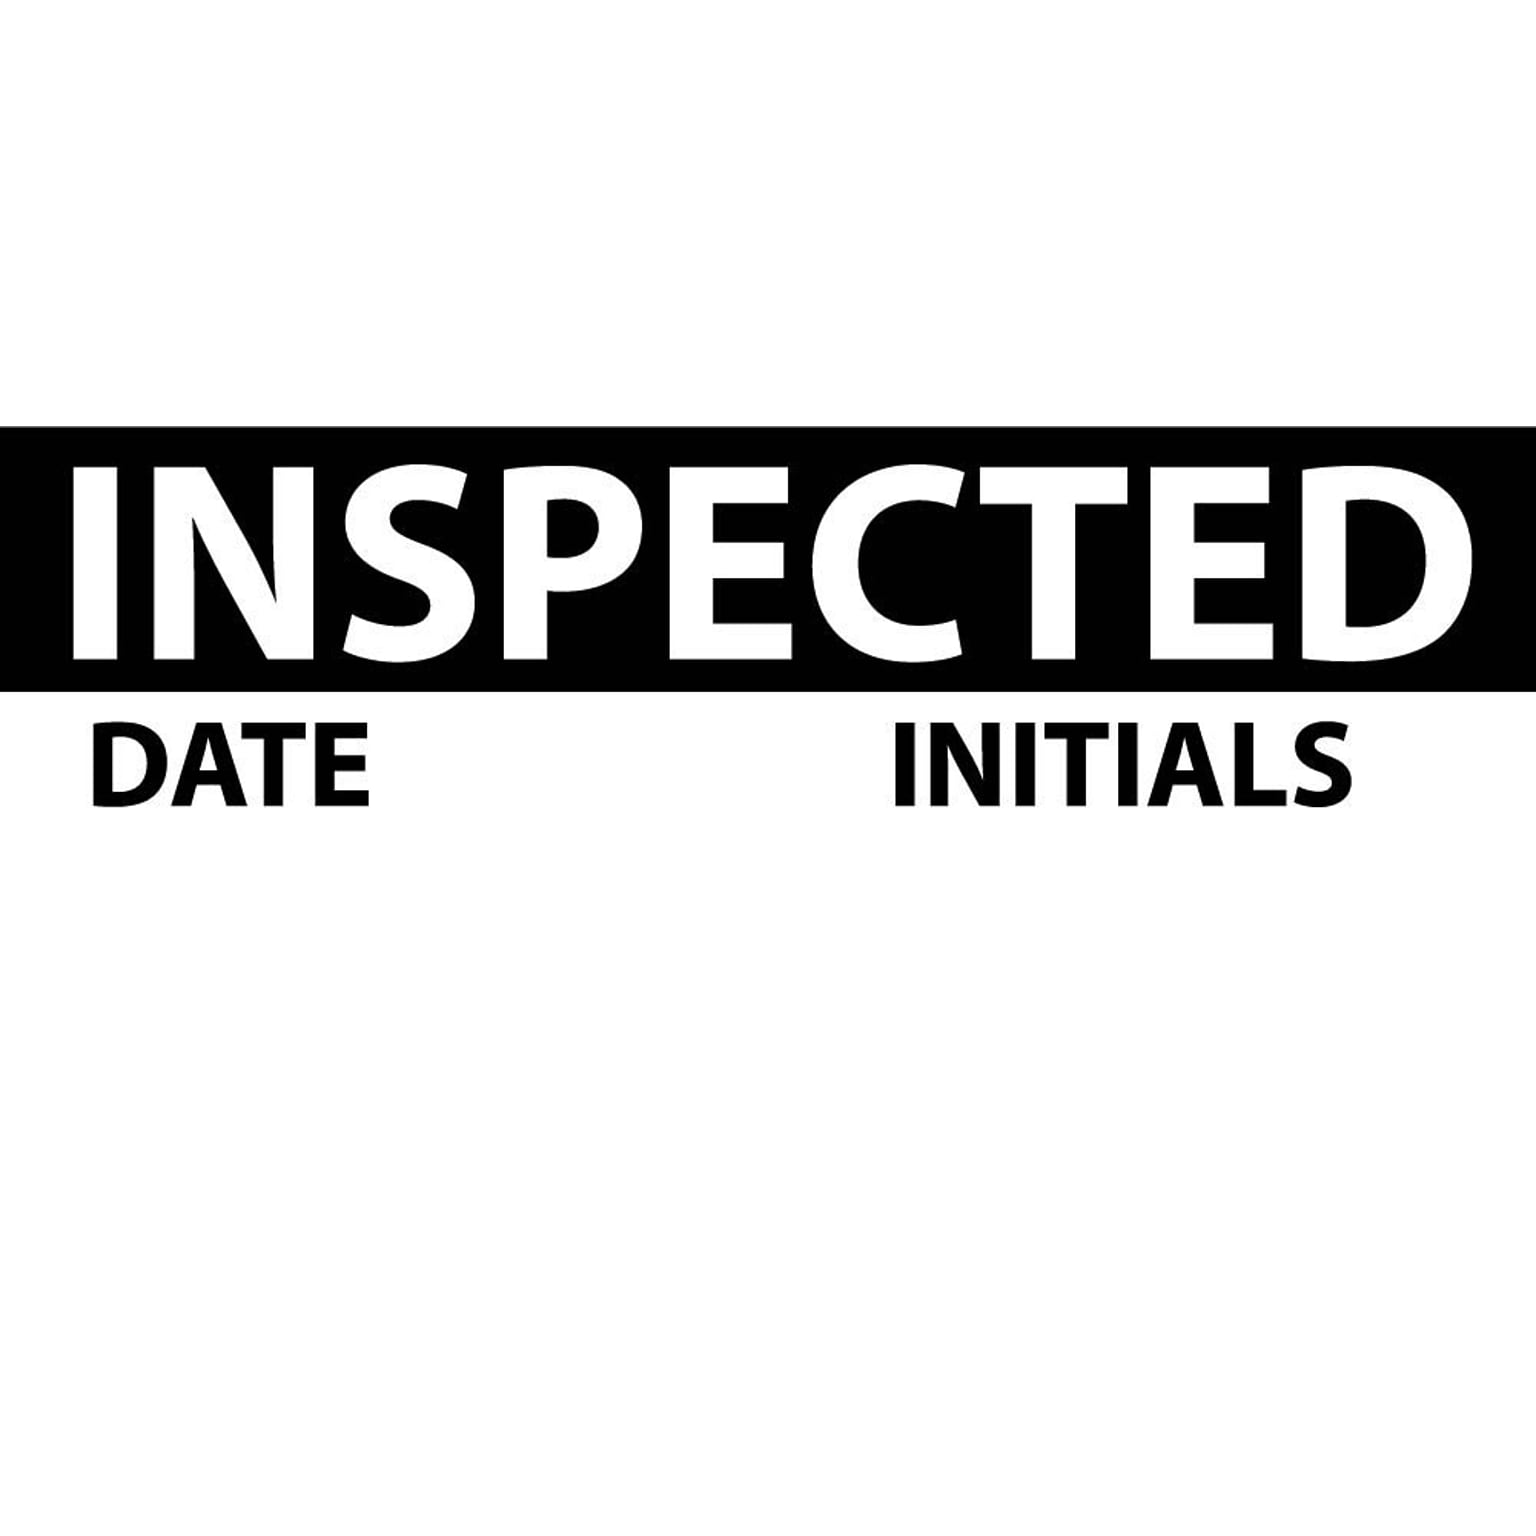 Inspection Labels; Inspected, Blk/Wht, 1 x 2 1/4, Adhesive Vinyl (27 Labels)